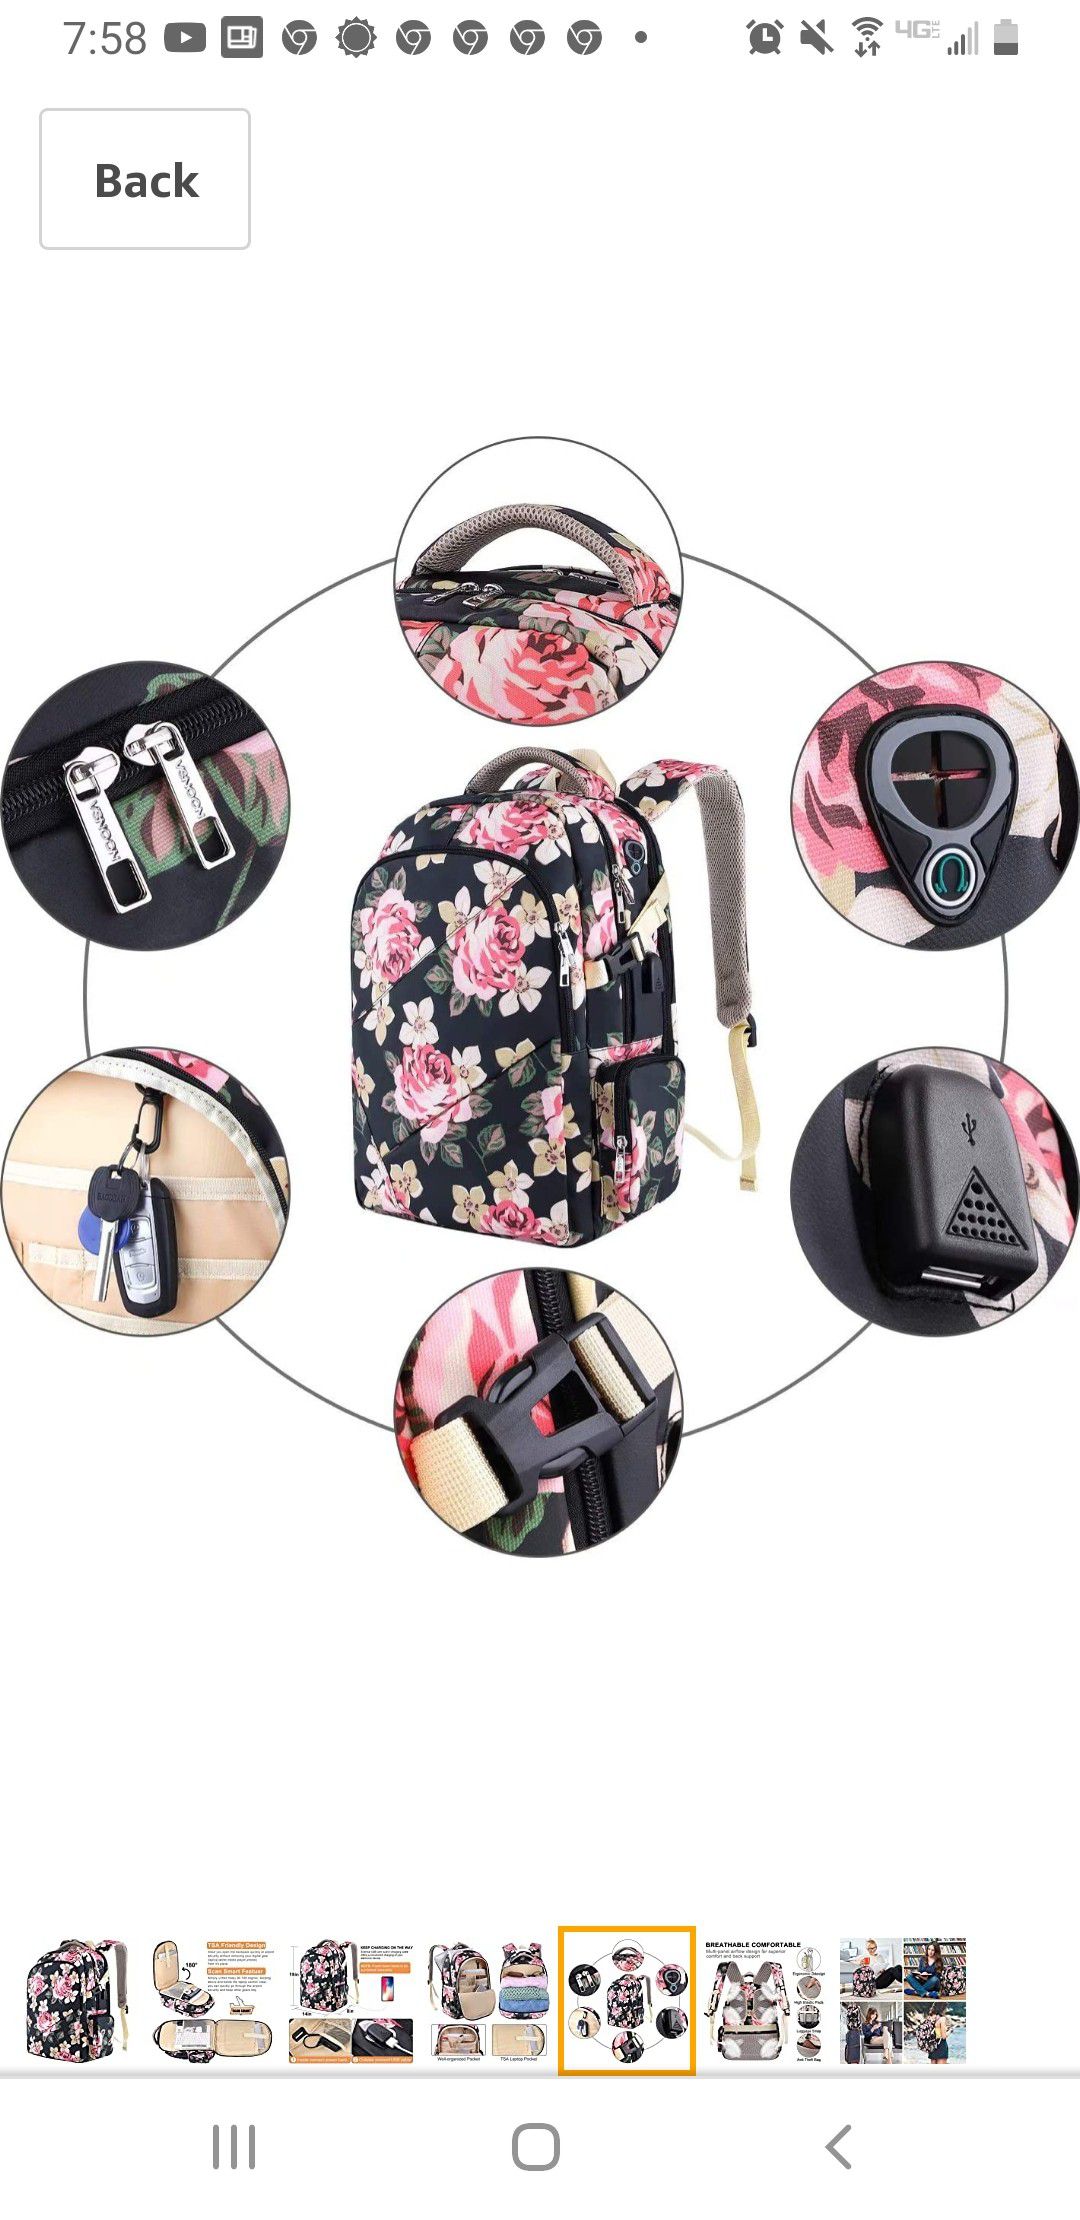 VSNOON Backpack